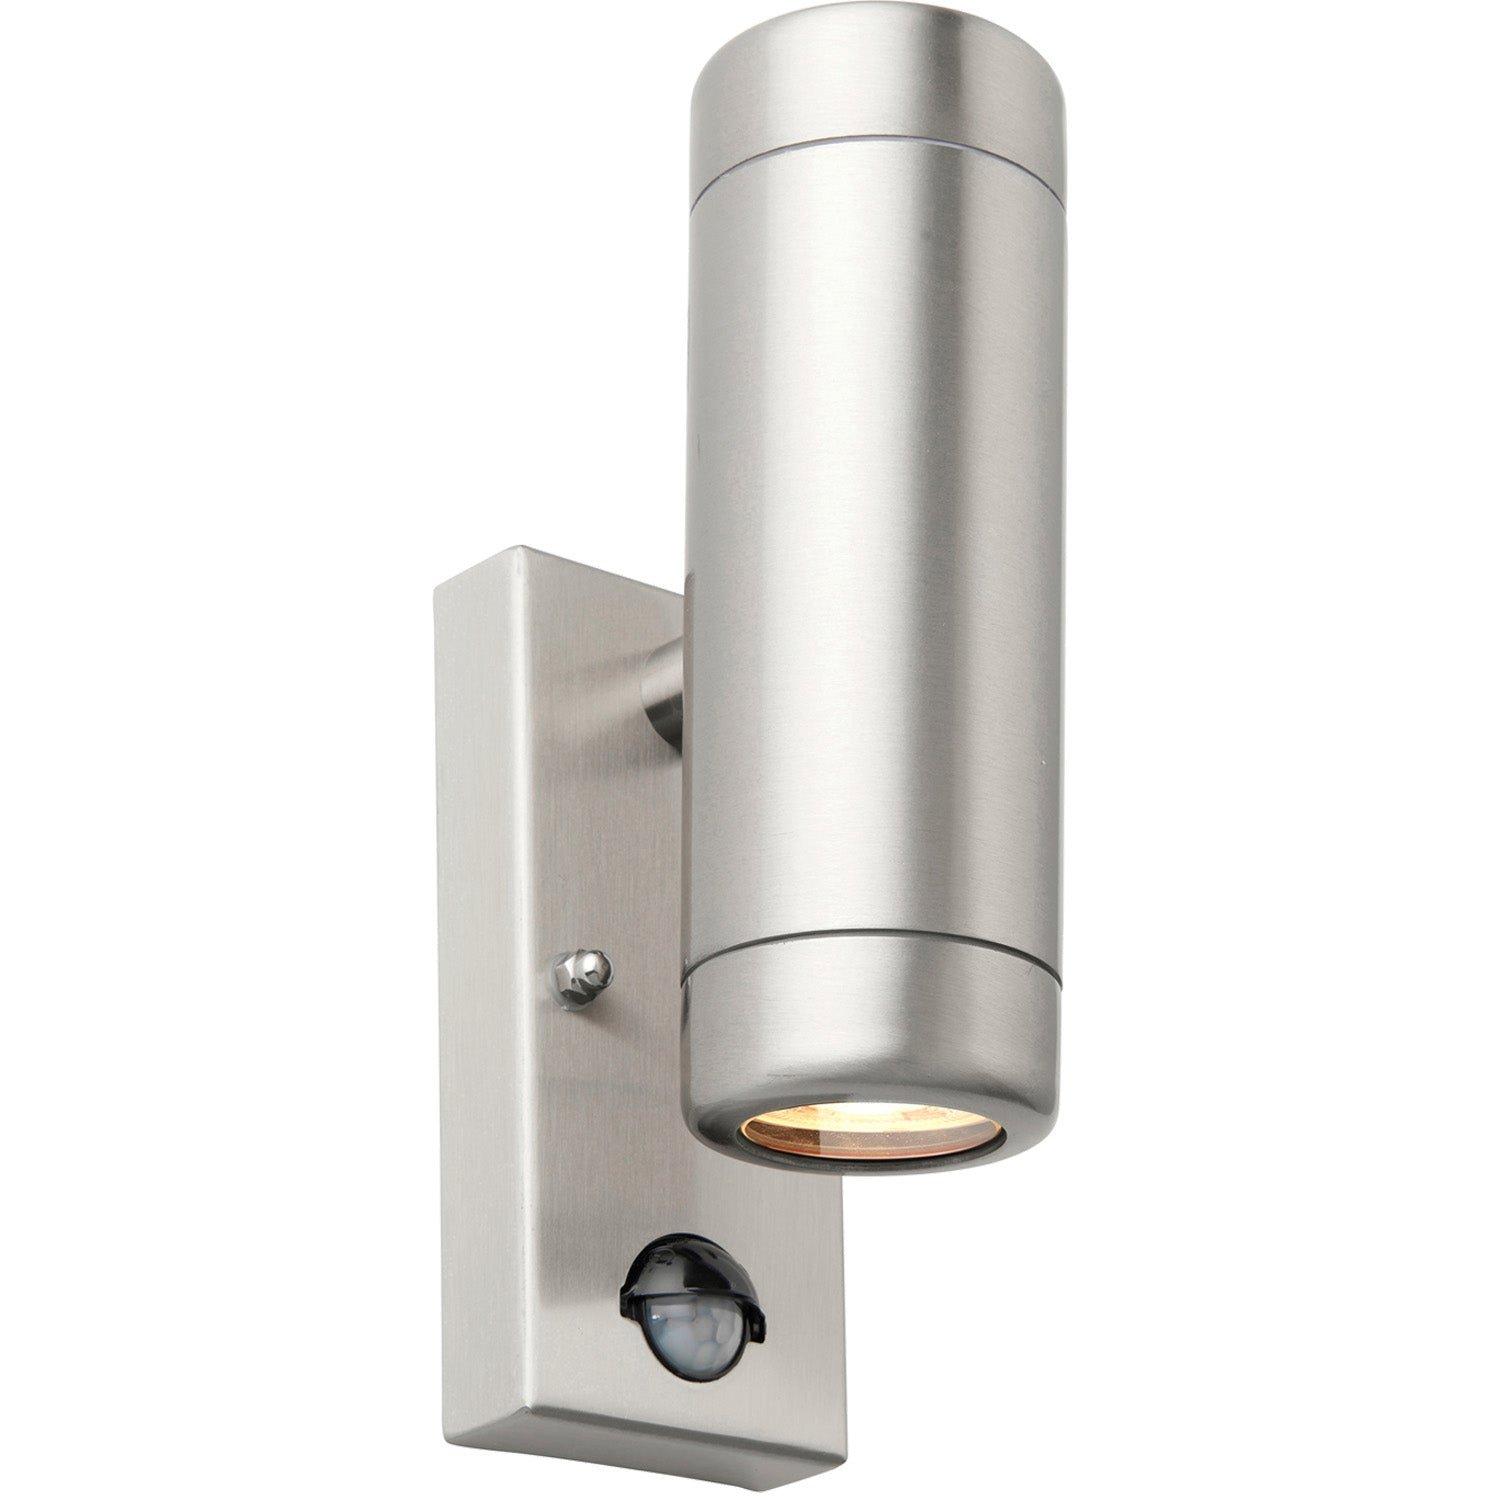 Twin Up & Down Wall Light with PIR Sensor - 2 x 7W GU10 LED - Brushed Steel